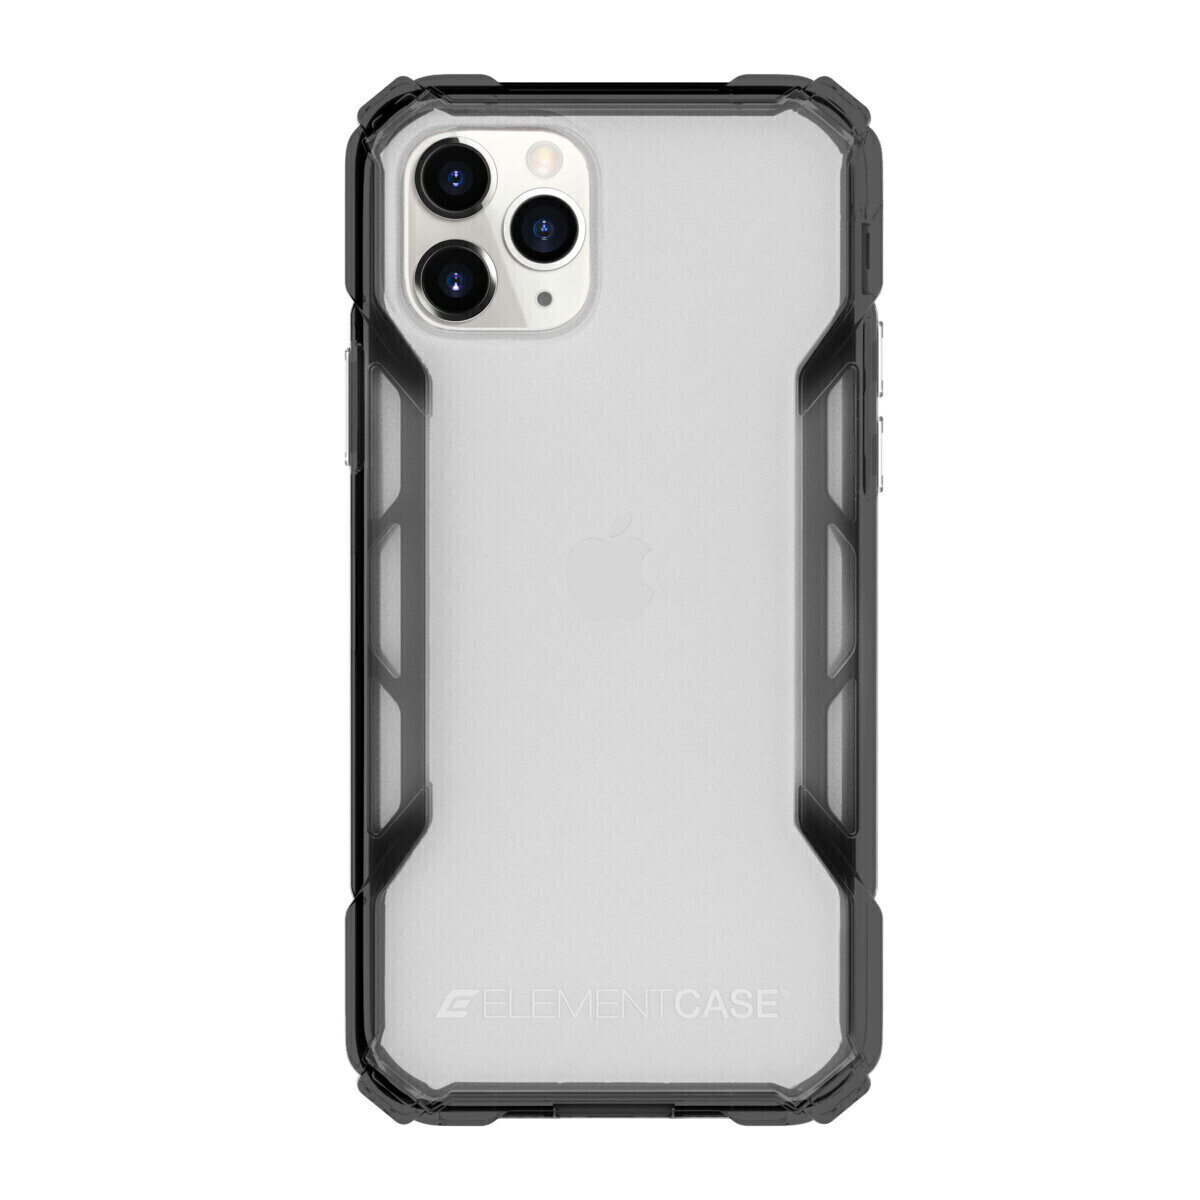 Element Case iPhone 11 Pro Max Rally, Black